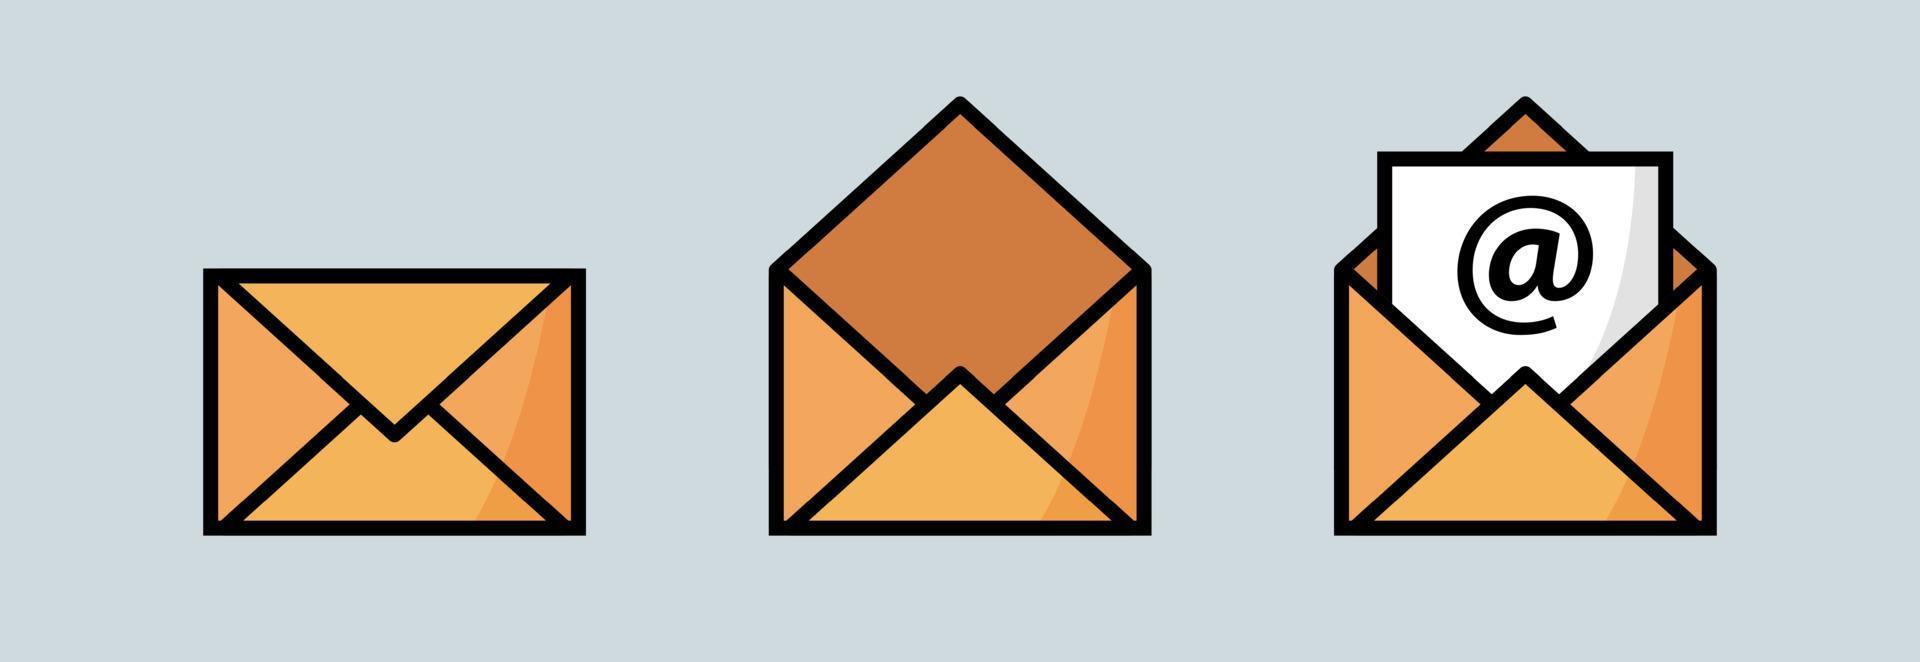 set enveloppen pictogrammen. berichten envelop of brieven envelop collectie. vector